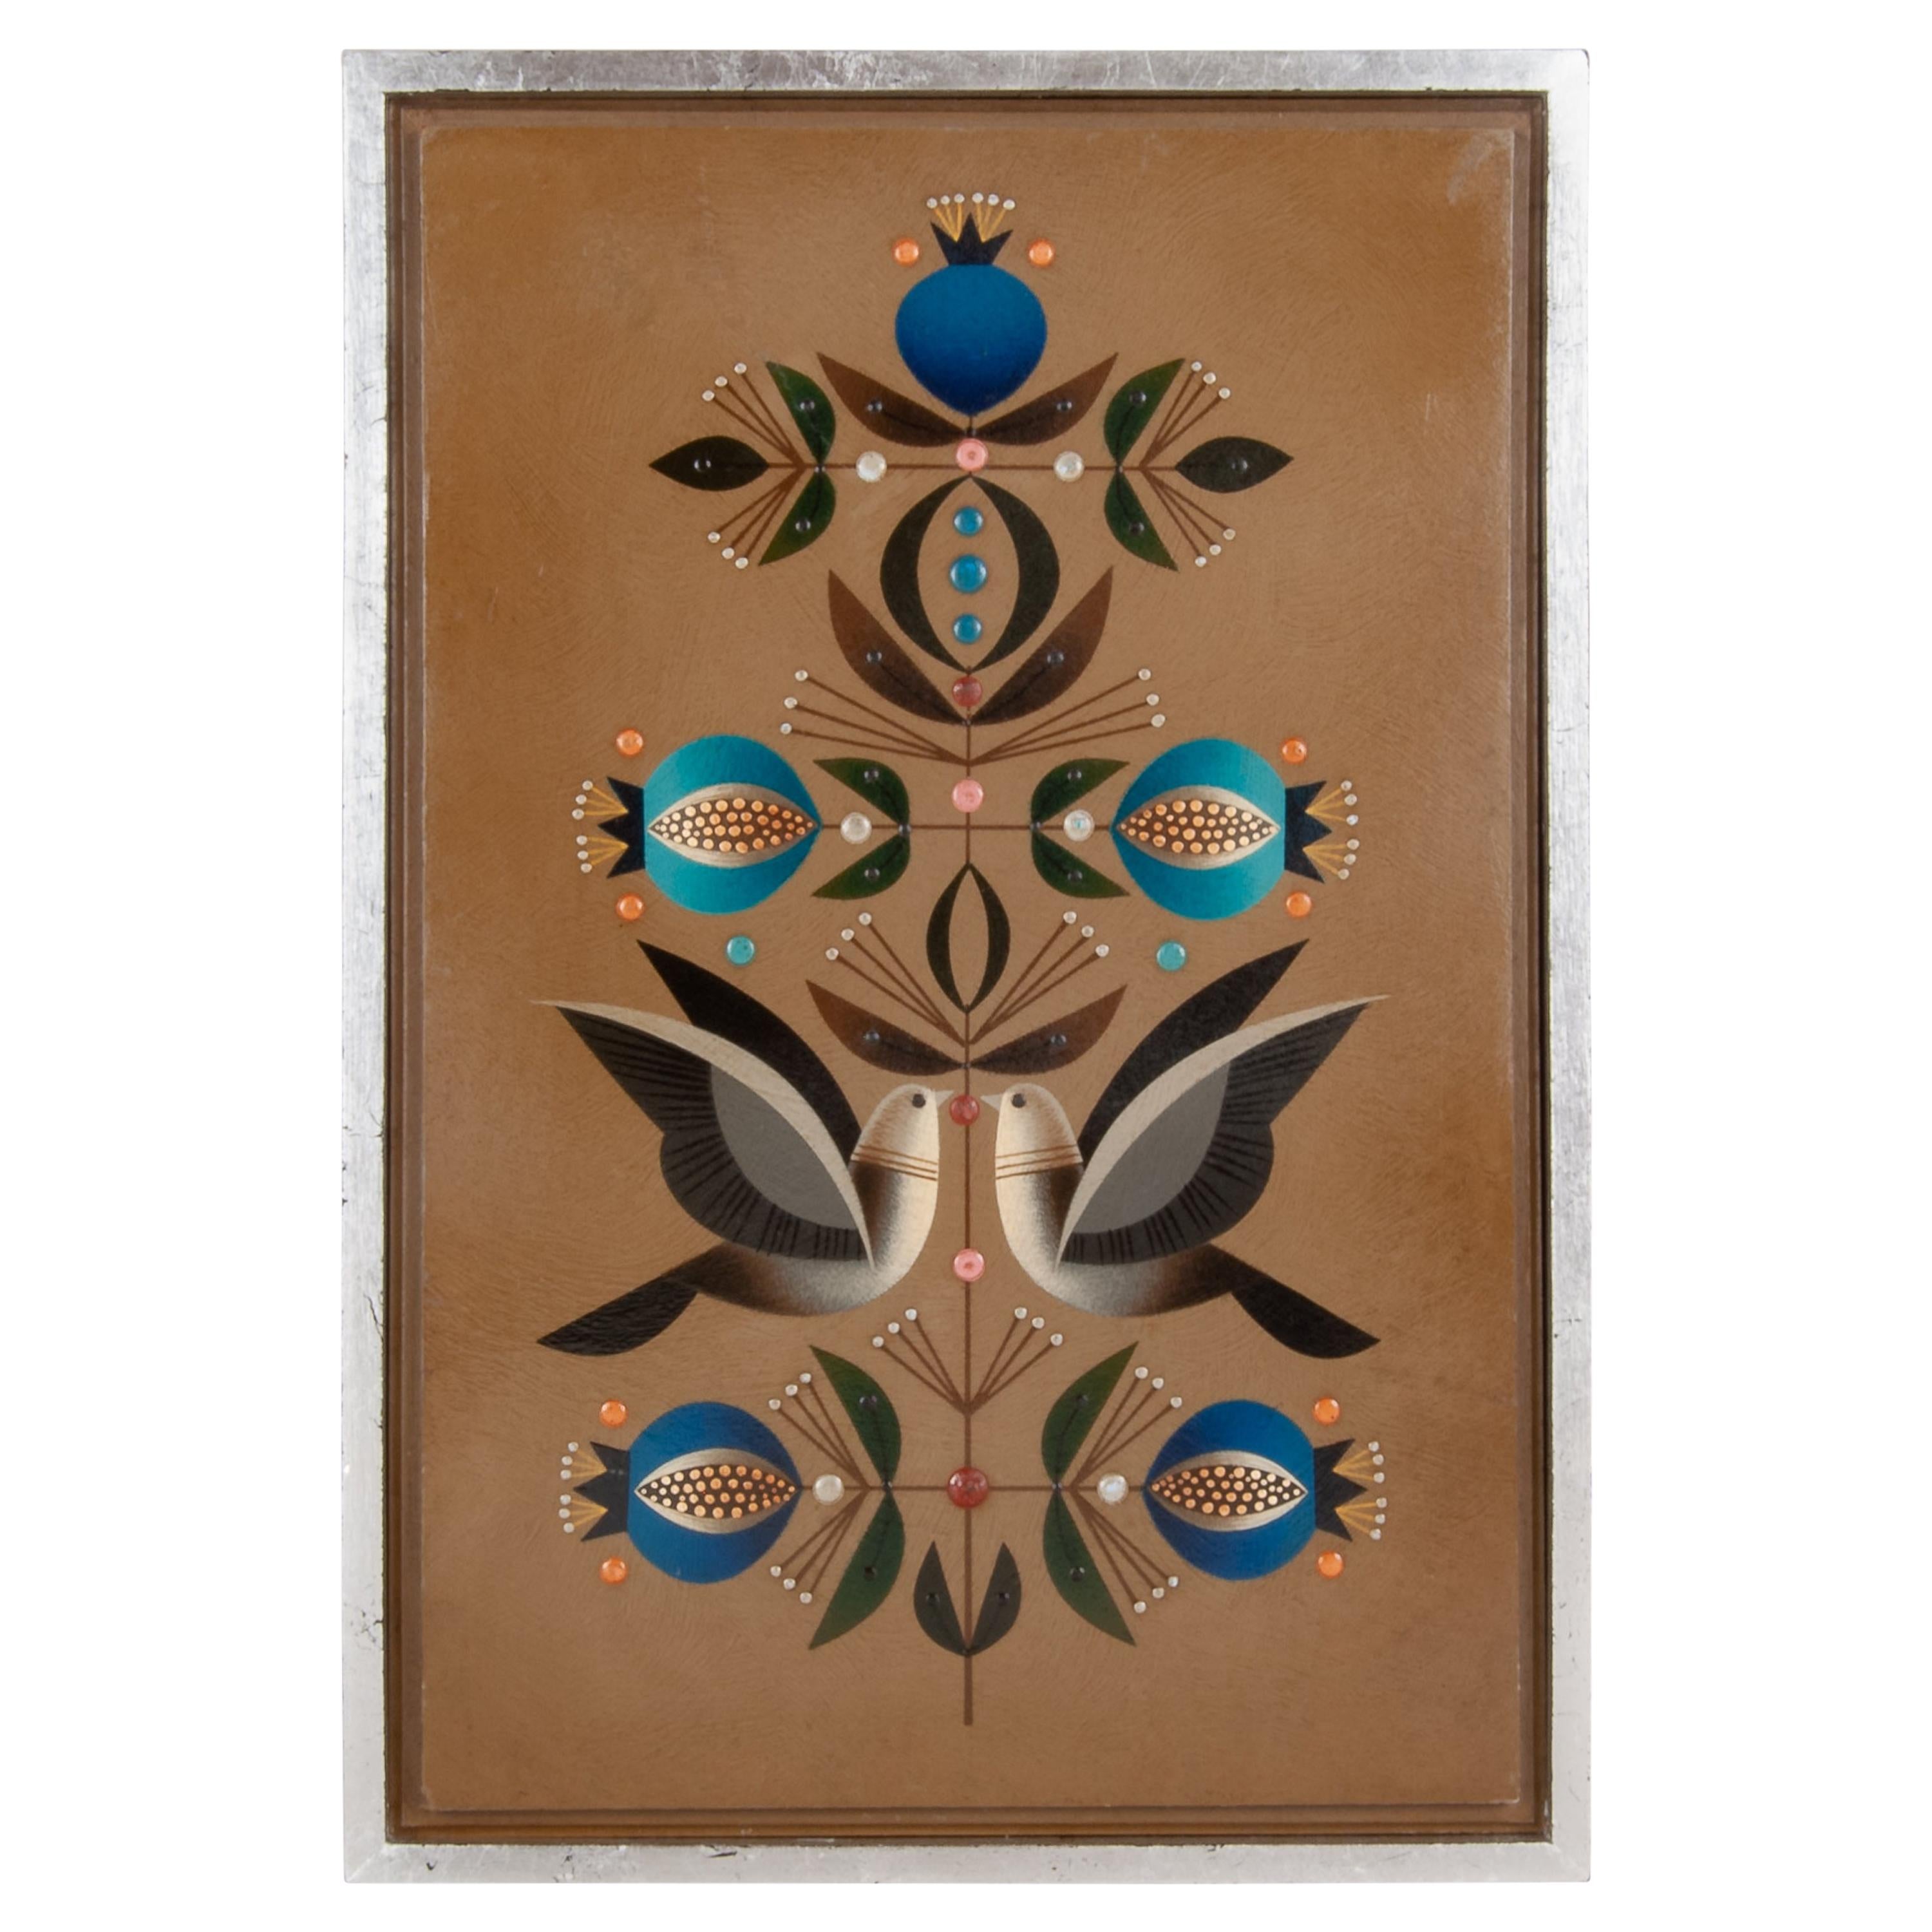 Original Acrylic on Wood Painting of Doves & Pomegranates by A Rangel Hidalgo